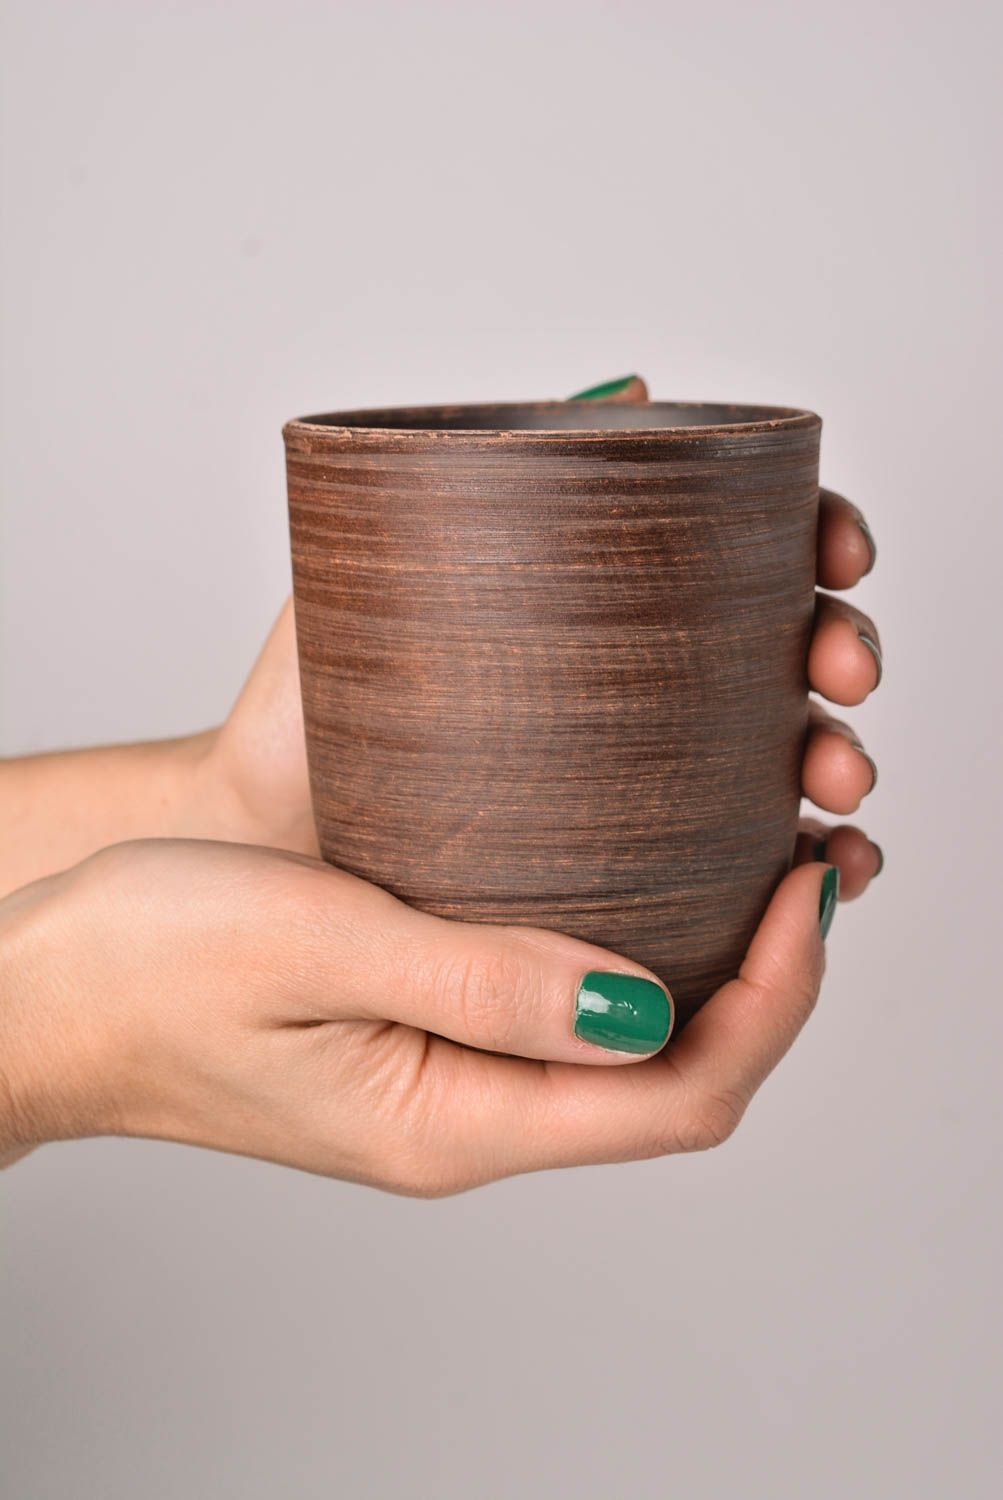 Beautiful handmade ceramic glass kitchen supplies pottery works gift ideas photo 2